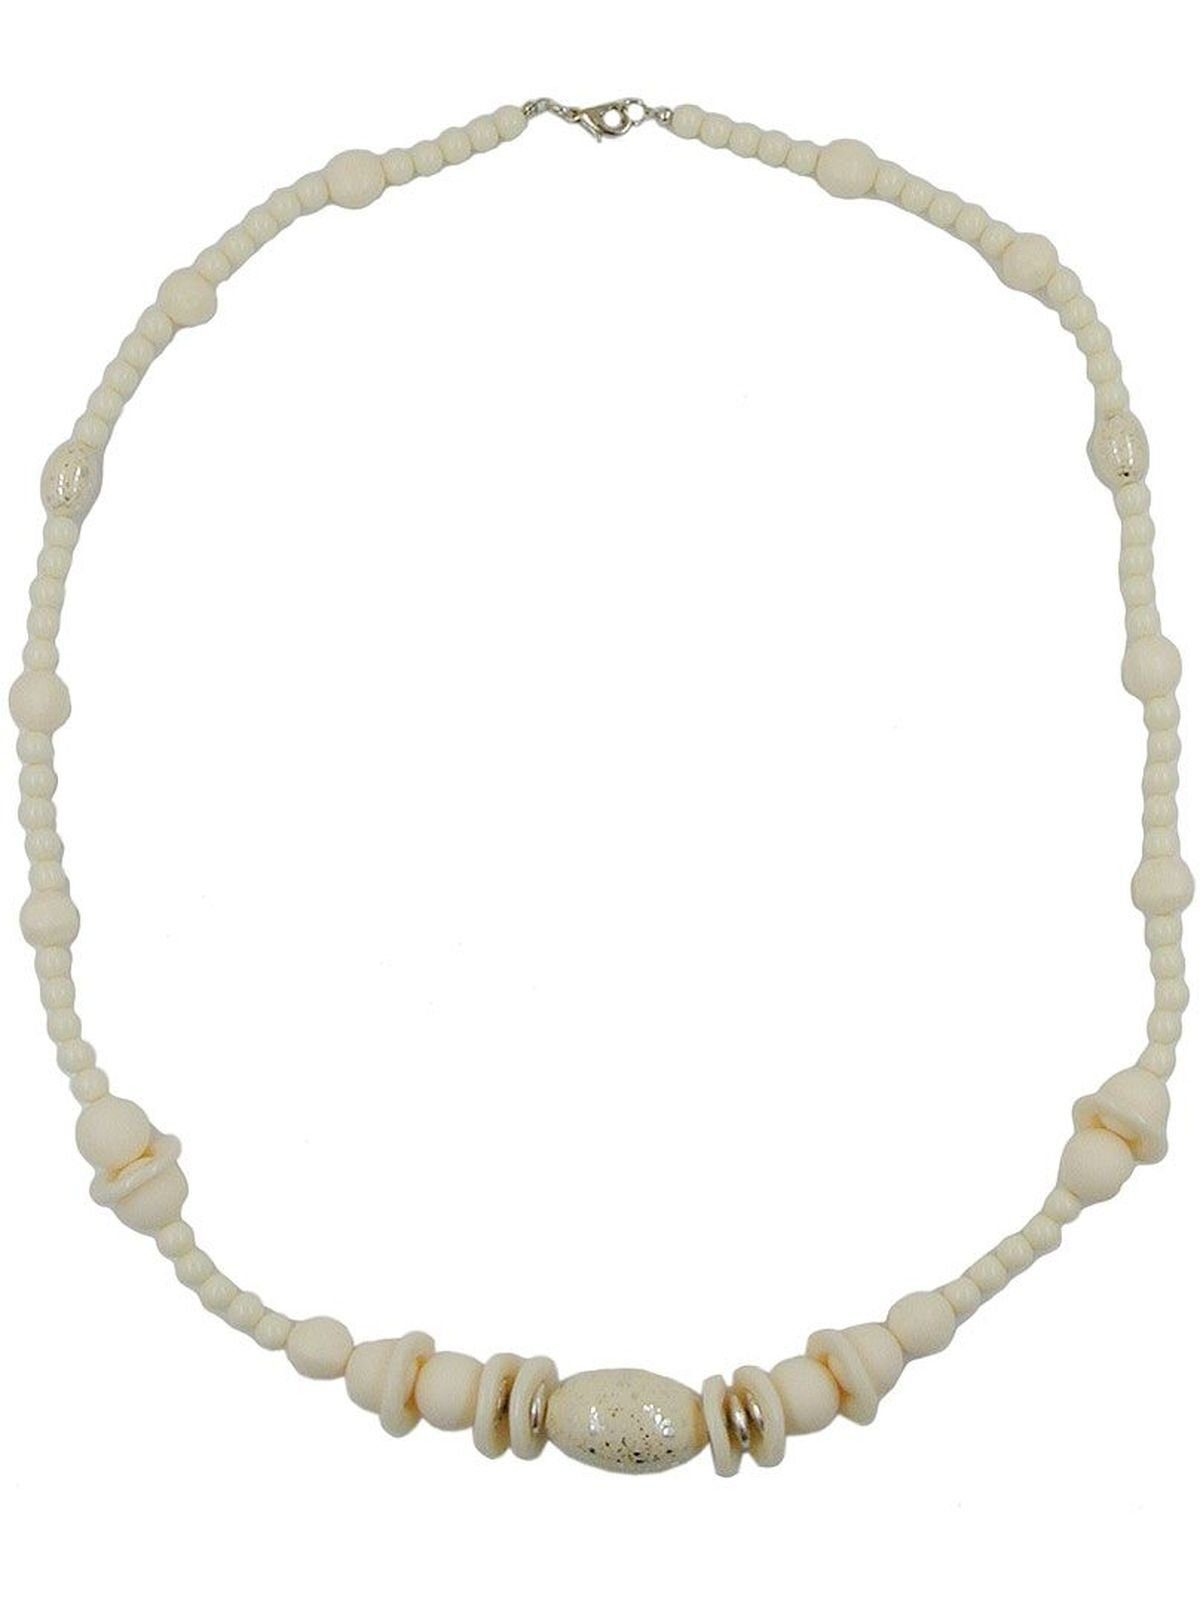 Gallay Perlenkette Kette Kunststoffperlen cremefarben goldfarben 70cm